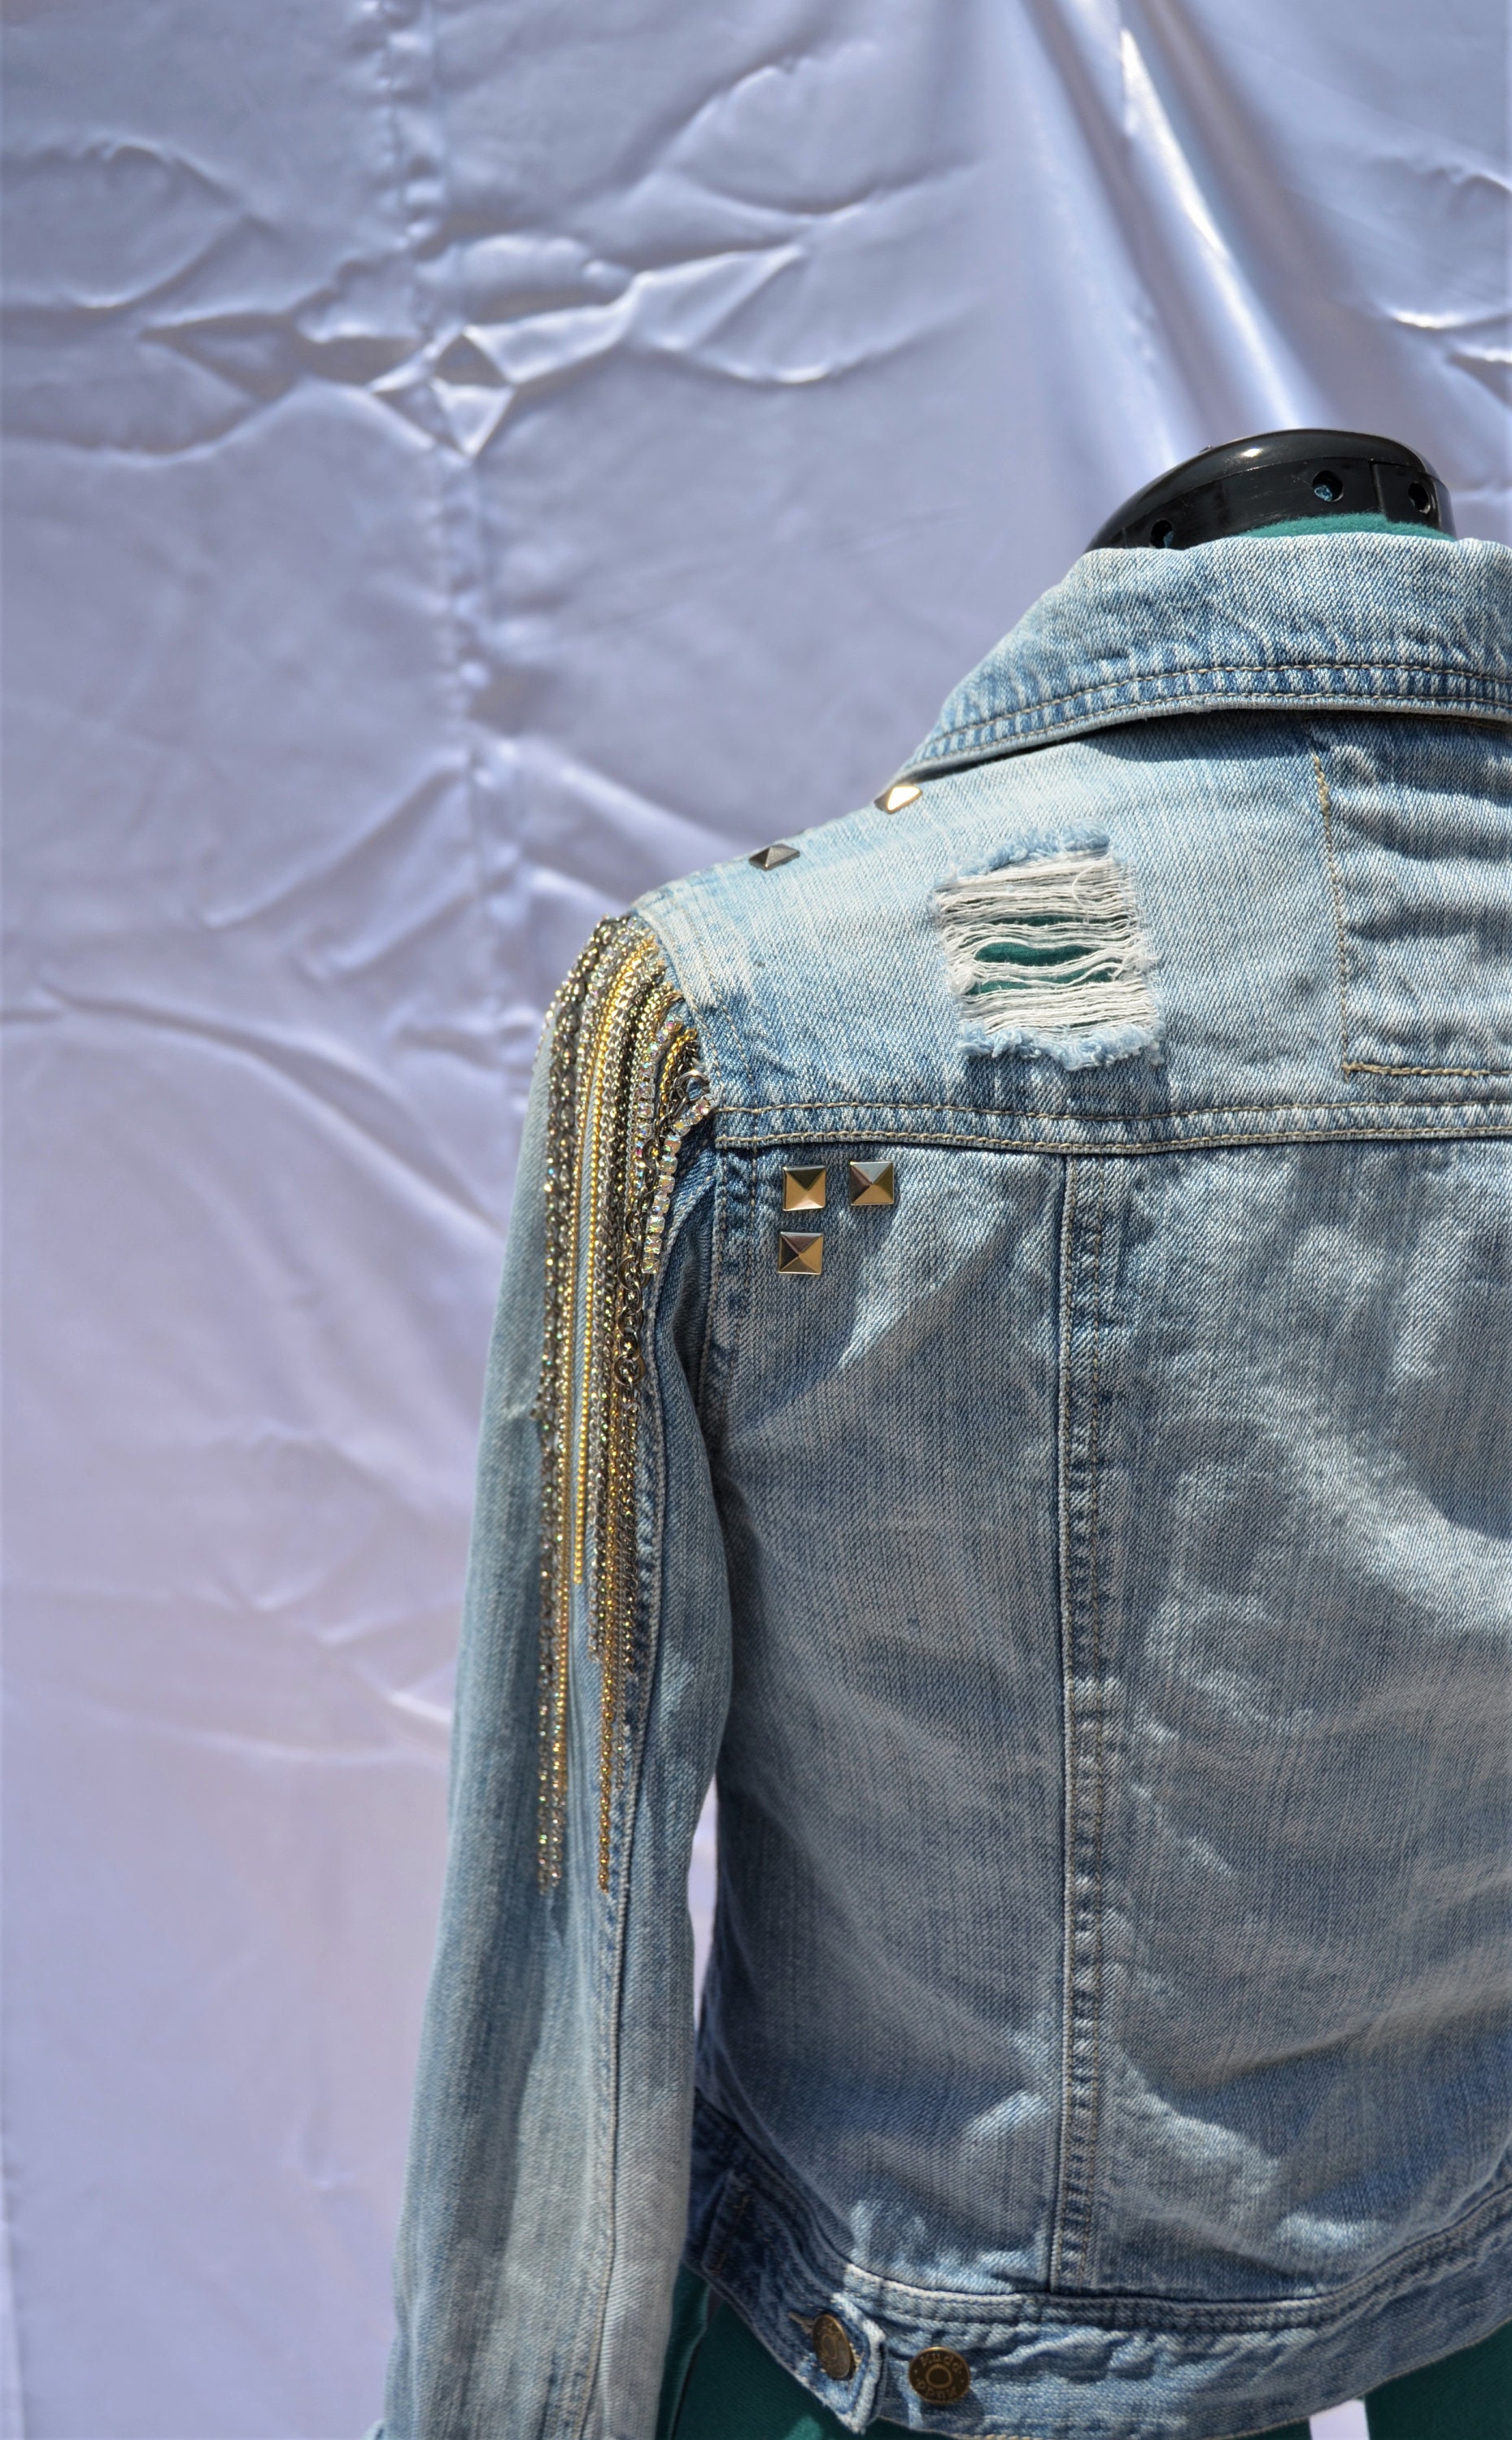 Jean Jacket W/ Assorted Chain Detailing Studded Denim Jacket 